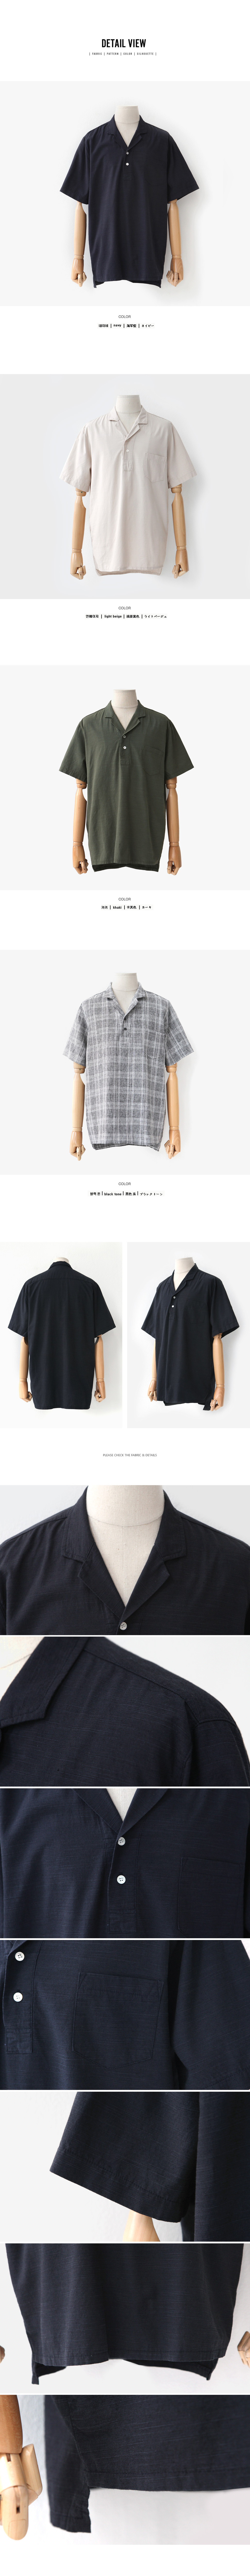 2TYPEツーボタンオープンカラーシャツ・全4色 | 詳細画像7